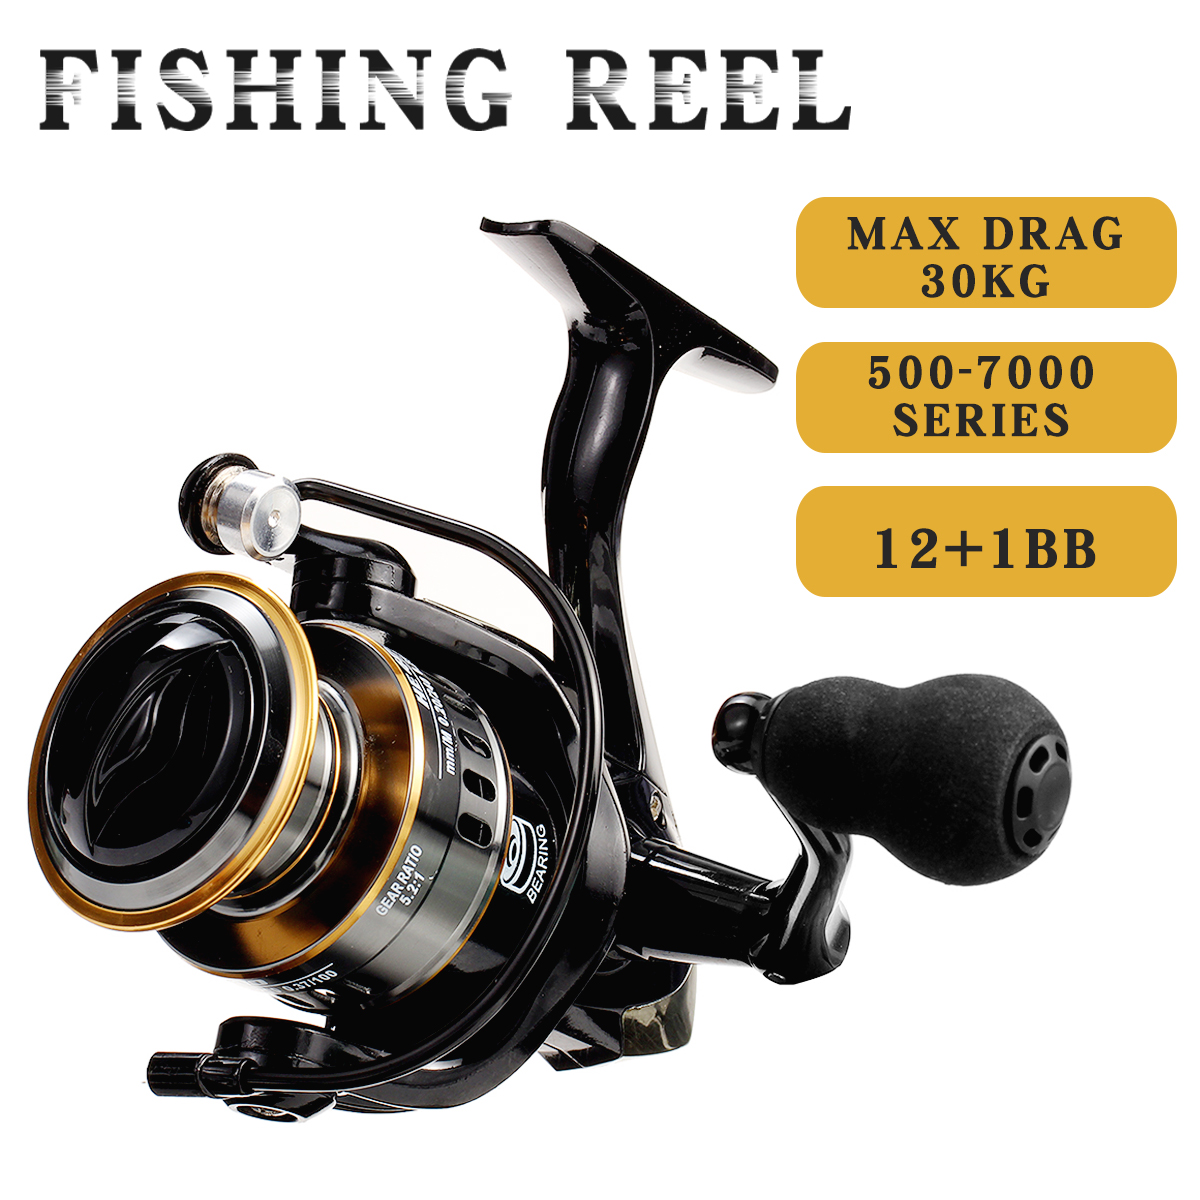 121BB-521-Fishing-Reel-HE500-7000-Drag-10kg-Metal-Spinning-Reel-Super-Smooth-Portable-Long-Casting-R-1899752-1